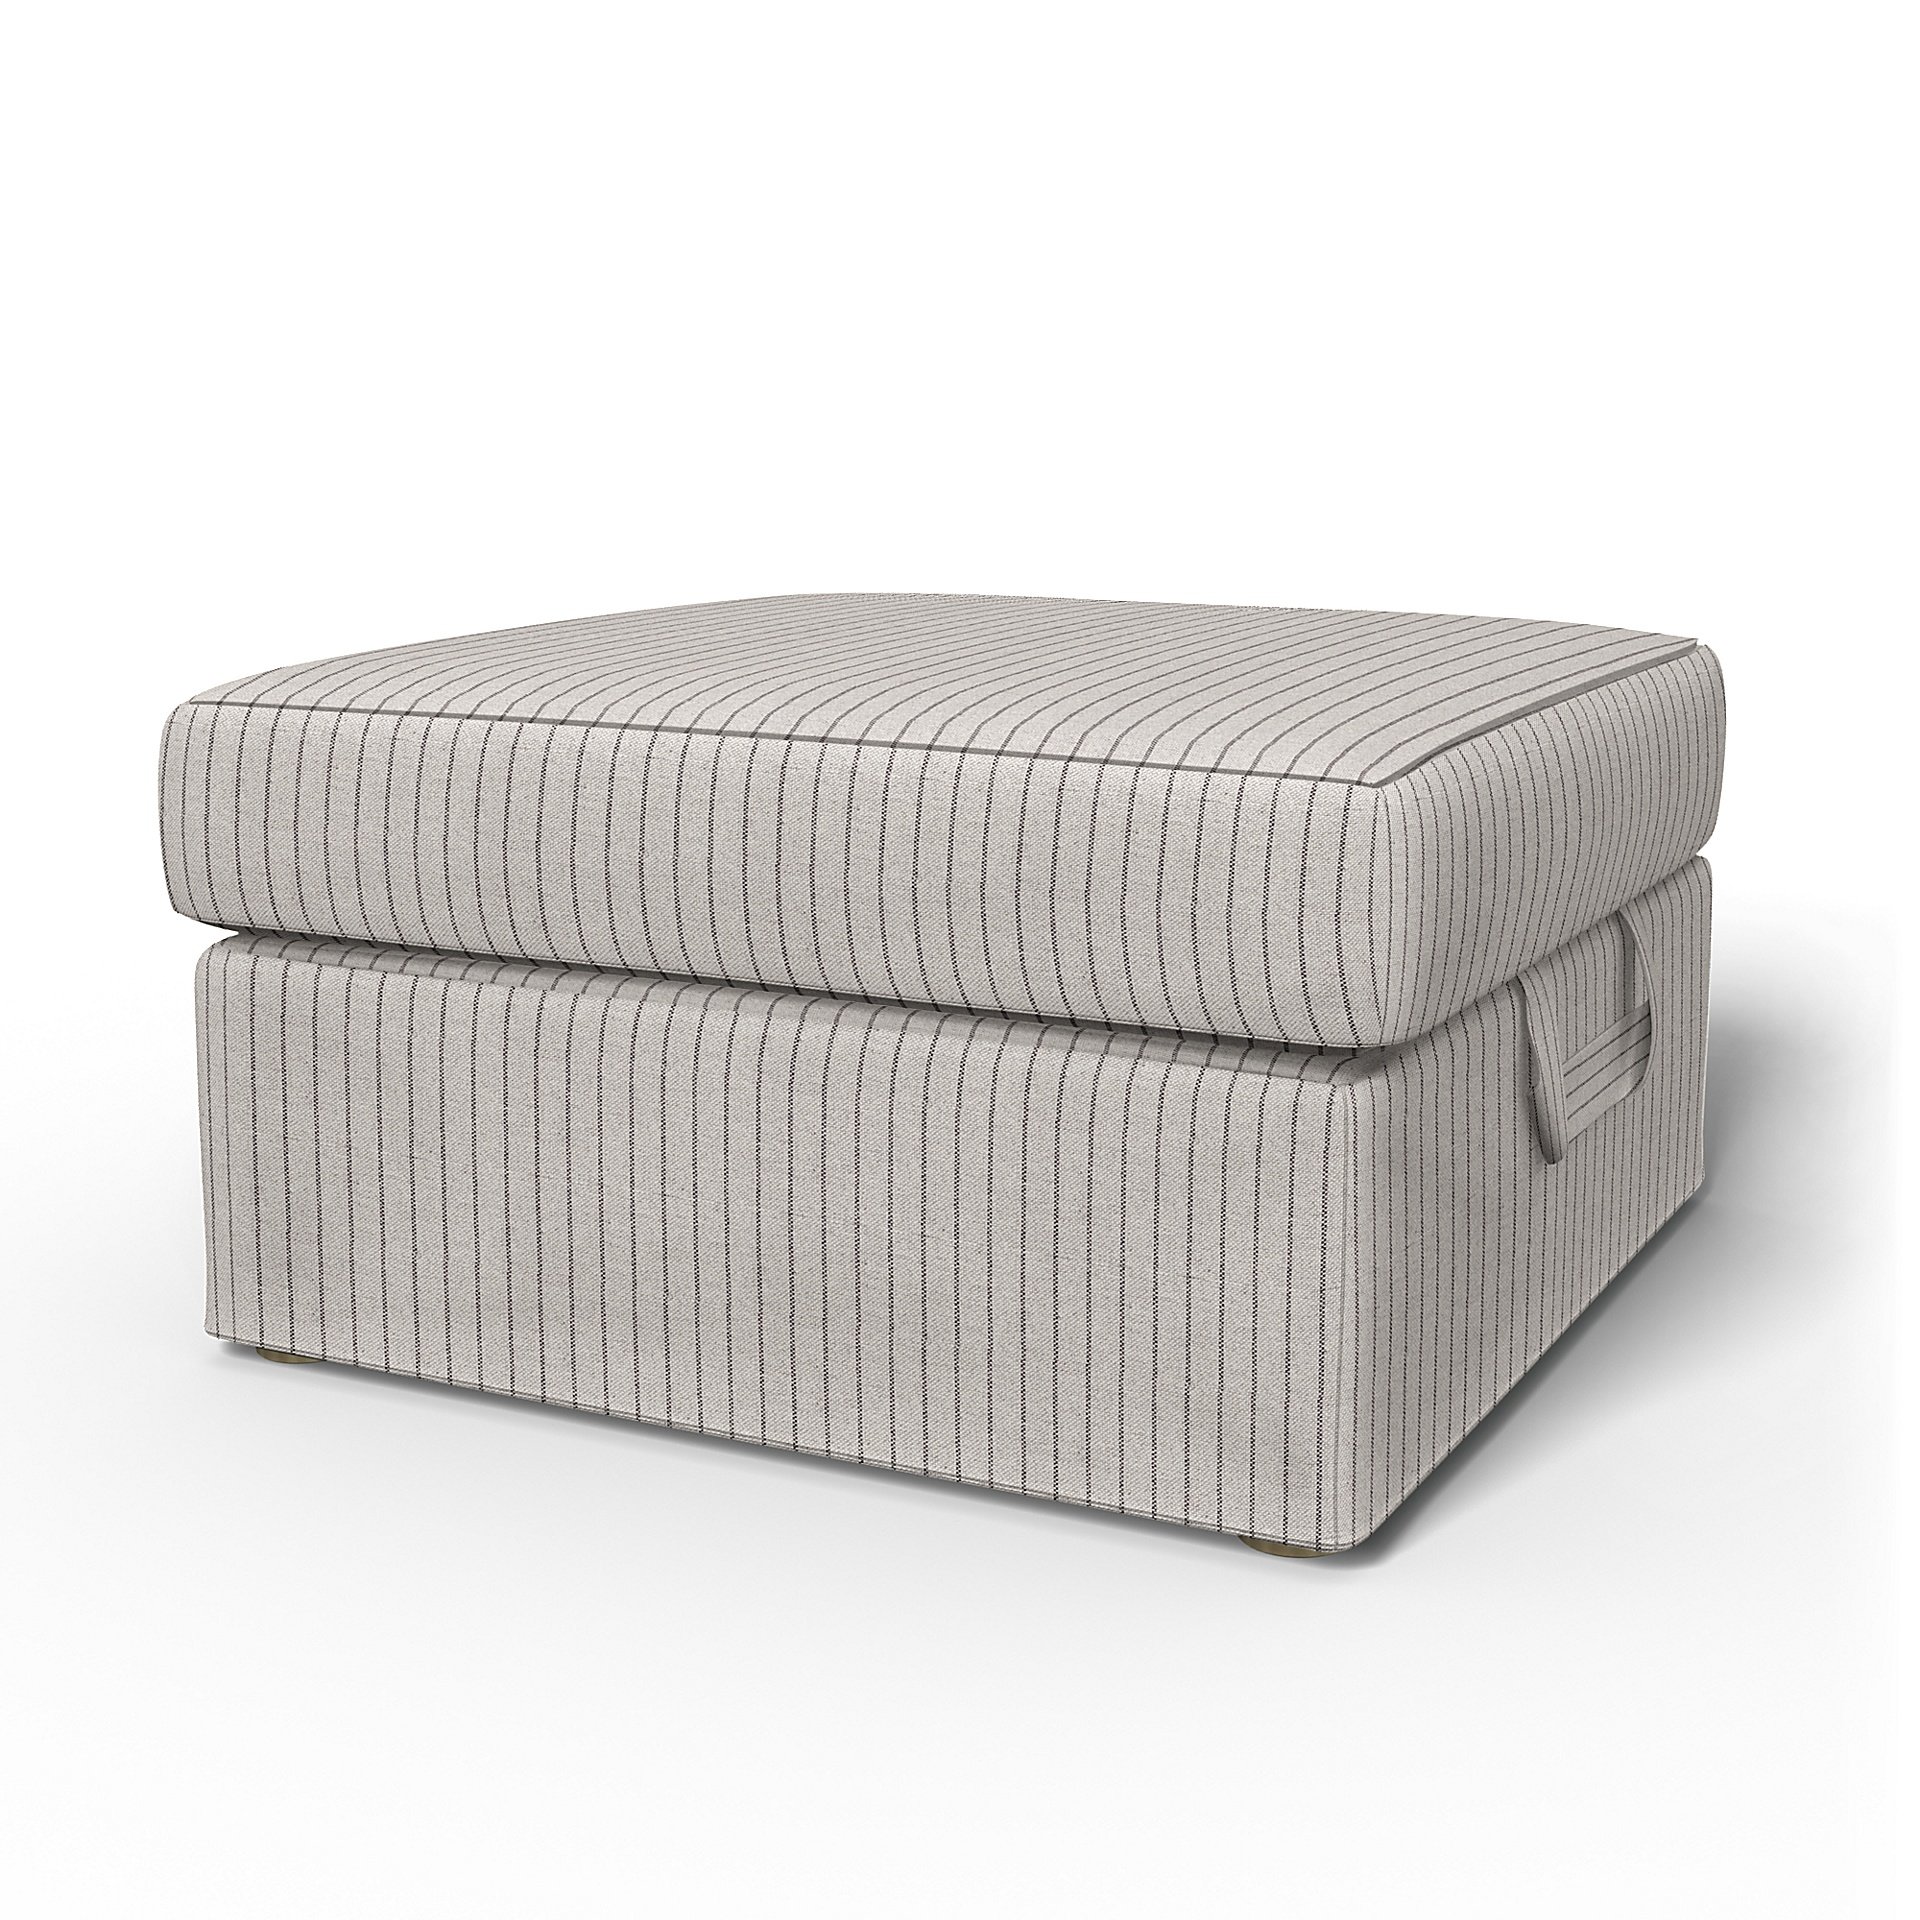 IKEA - Tomelilla Foto Footstool Cover, Silver Grey, Cotton - Bemz